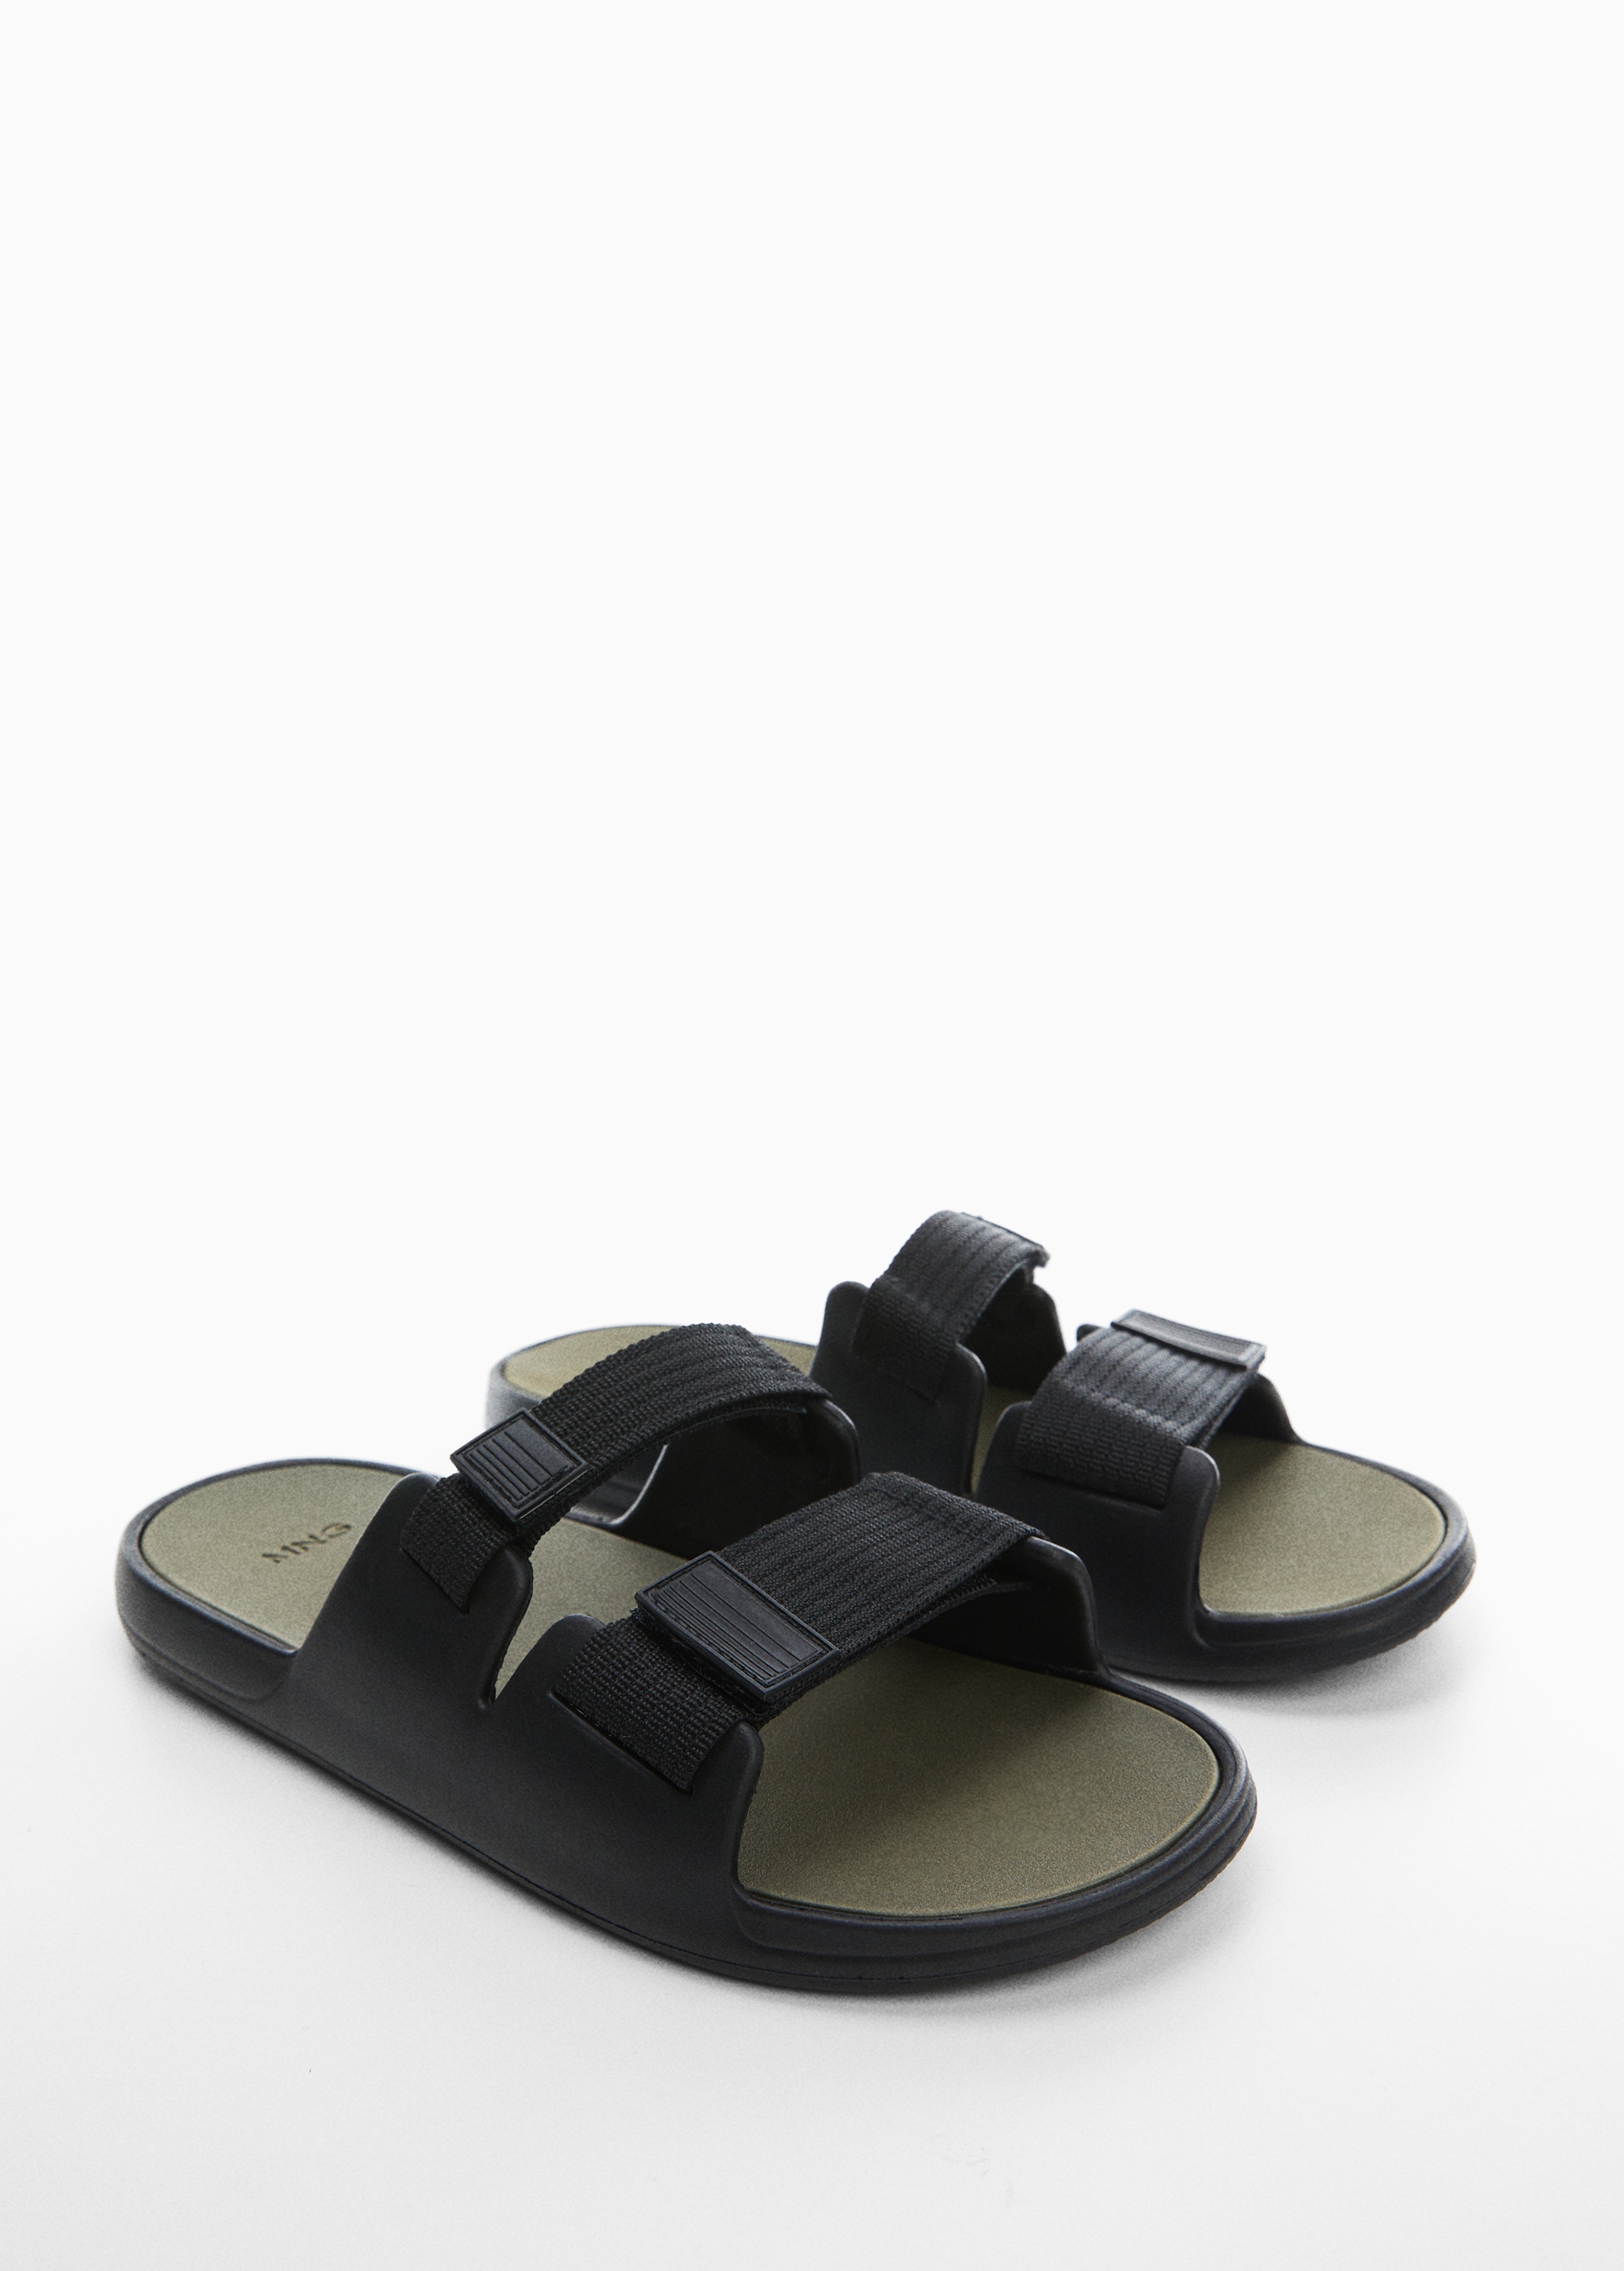 Velcro strap sandal - Medium plane